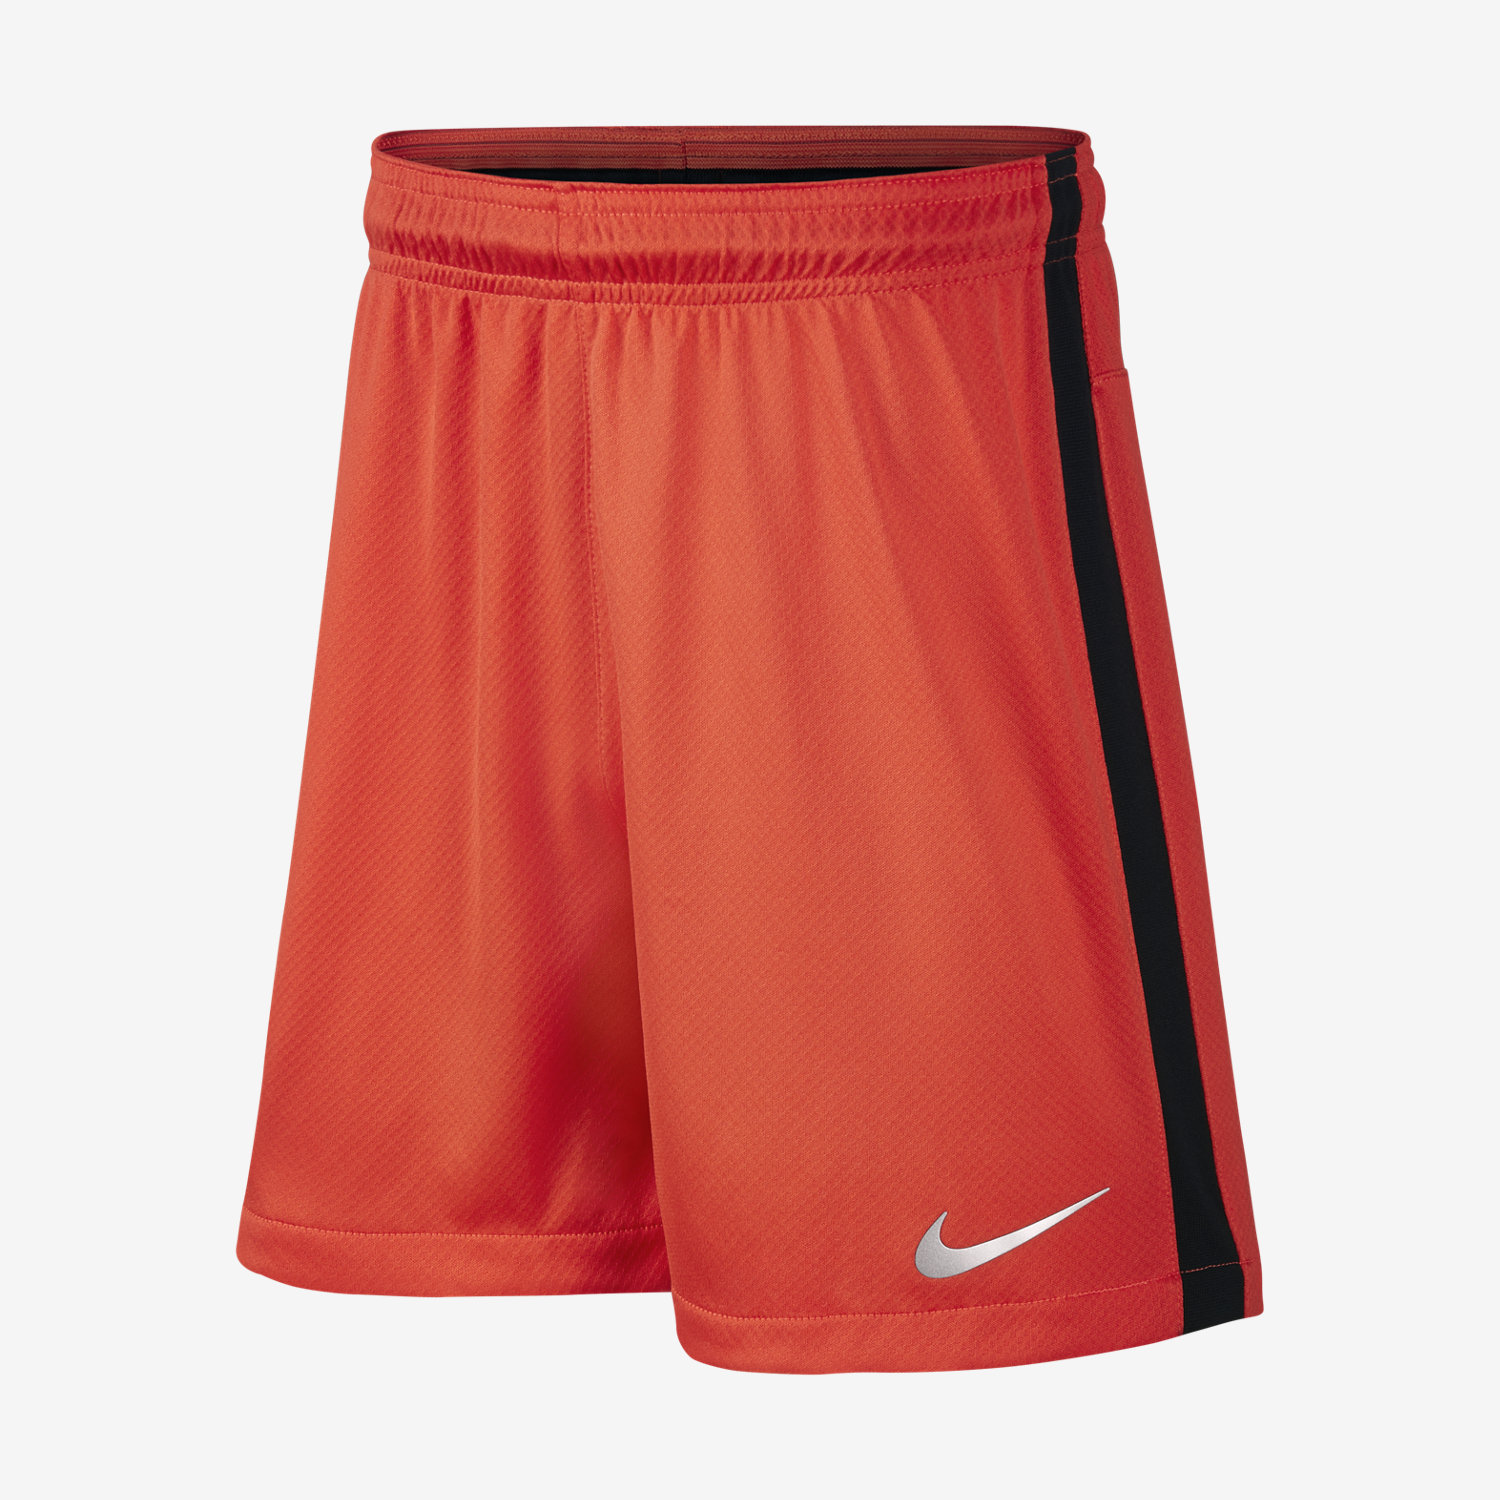 Nike Dry Neymar - Older Kids' Football Shorts